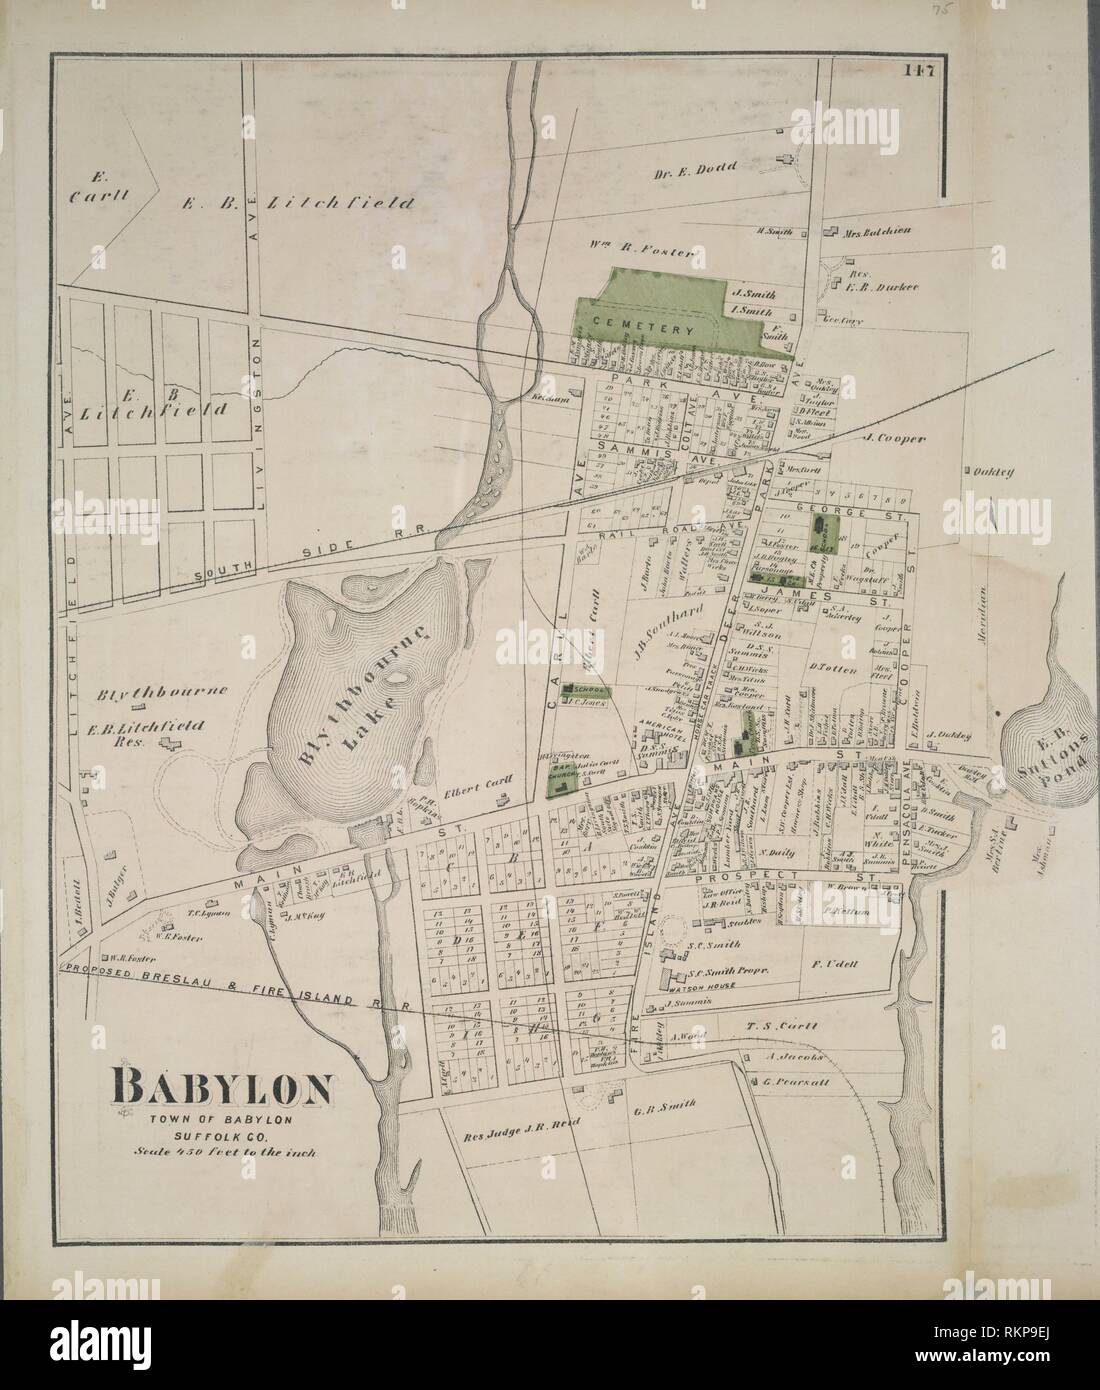 Babylon, die Stadt Babylon, Suffolk Co. Bier, F. W. (Frederick W.)  (kartograph) Bier, Comstock & Cline (Publisher). Atlanten von New York City  New Stockfotografie - Alamy